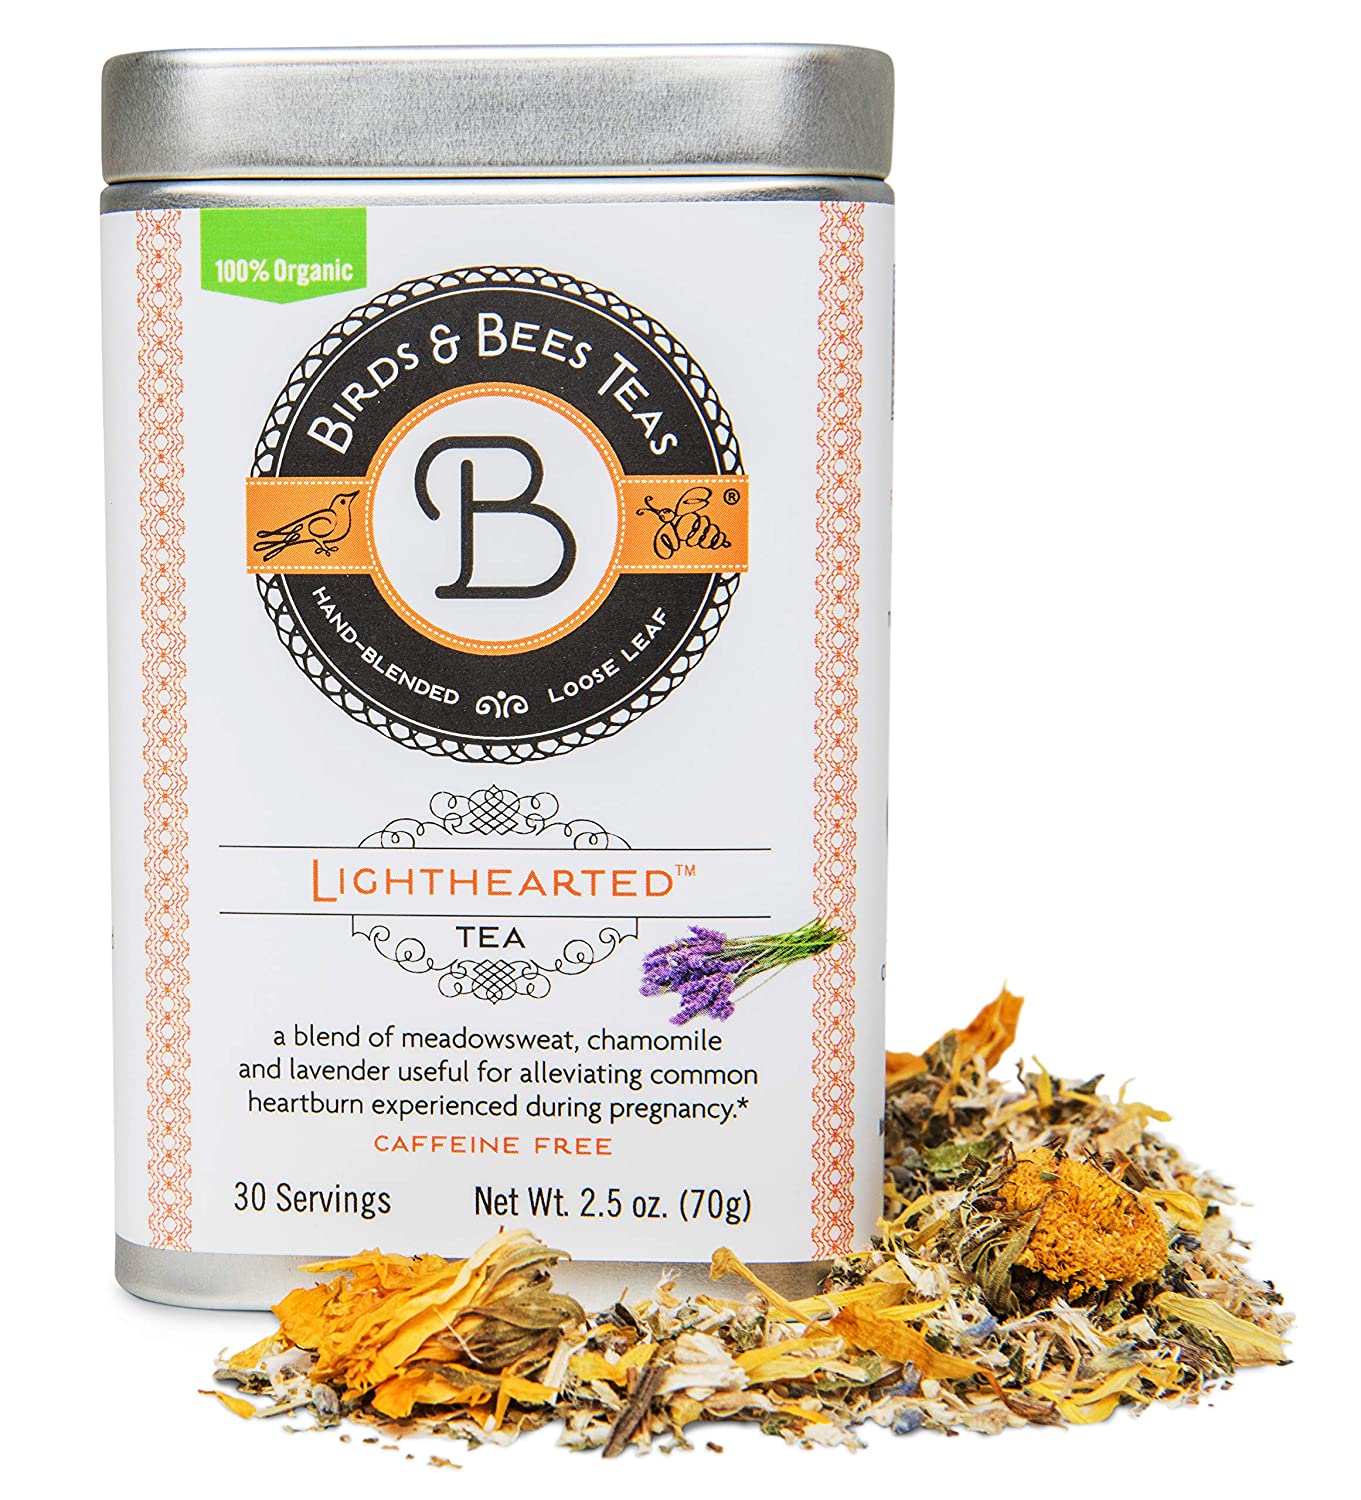 Amazon.com: Organic Heartburn Tea